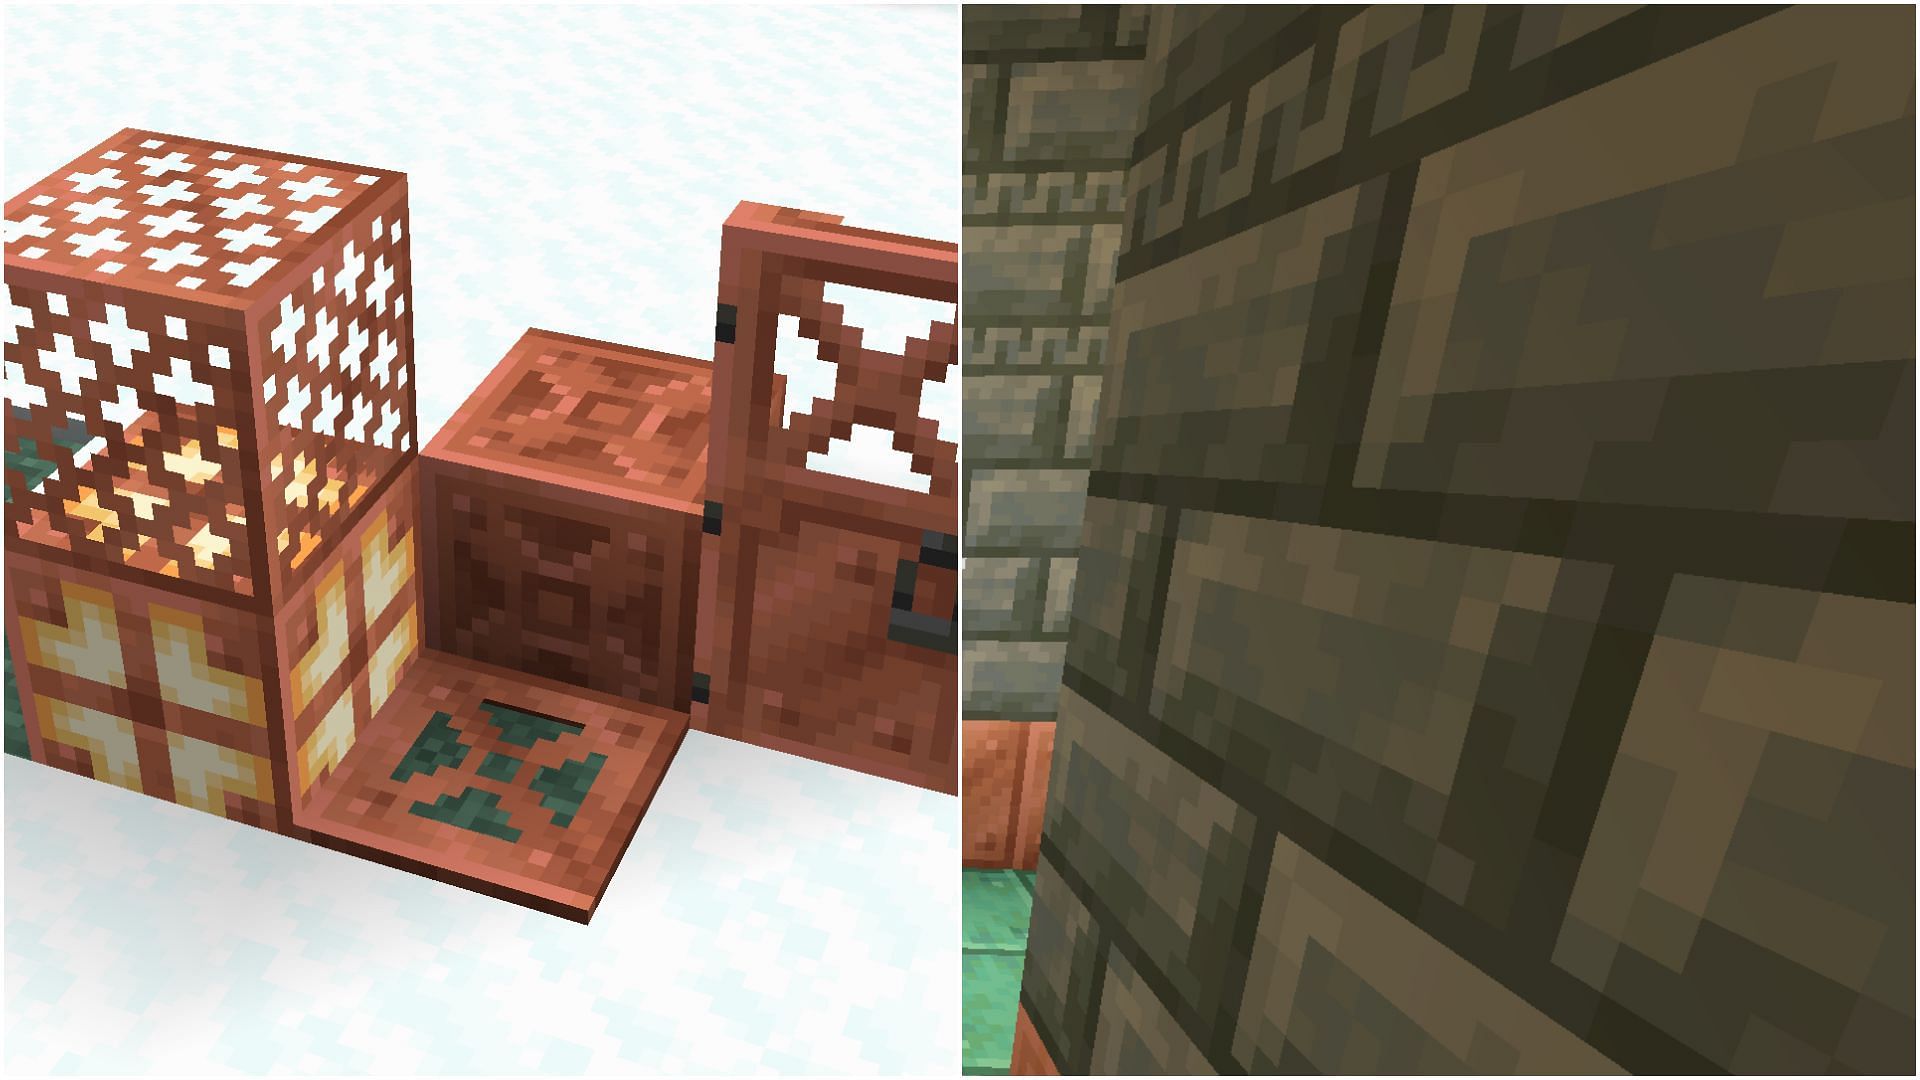 Copper and tuff building blocks (Image via Mojang Studios)